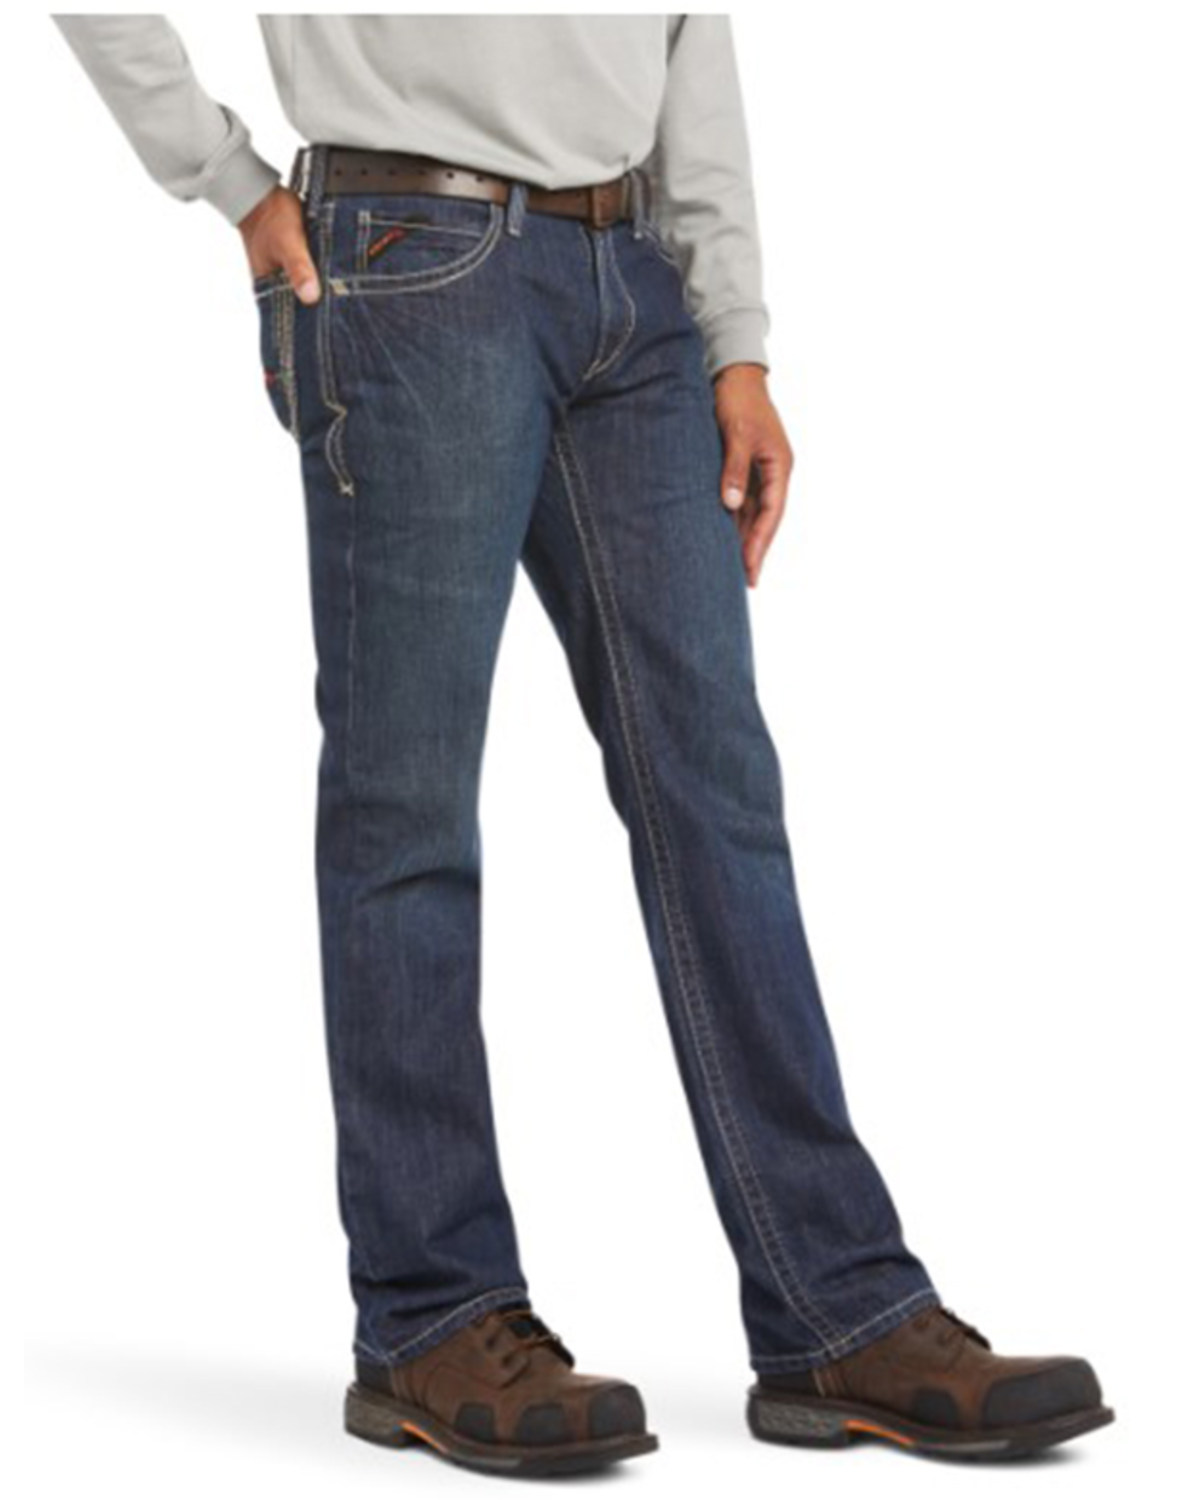 Ariat Men's FR M4 Shale Low Rise Boundary Bootcut Jeans - Big